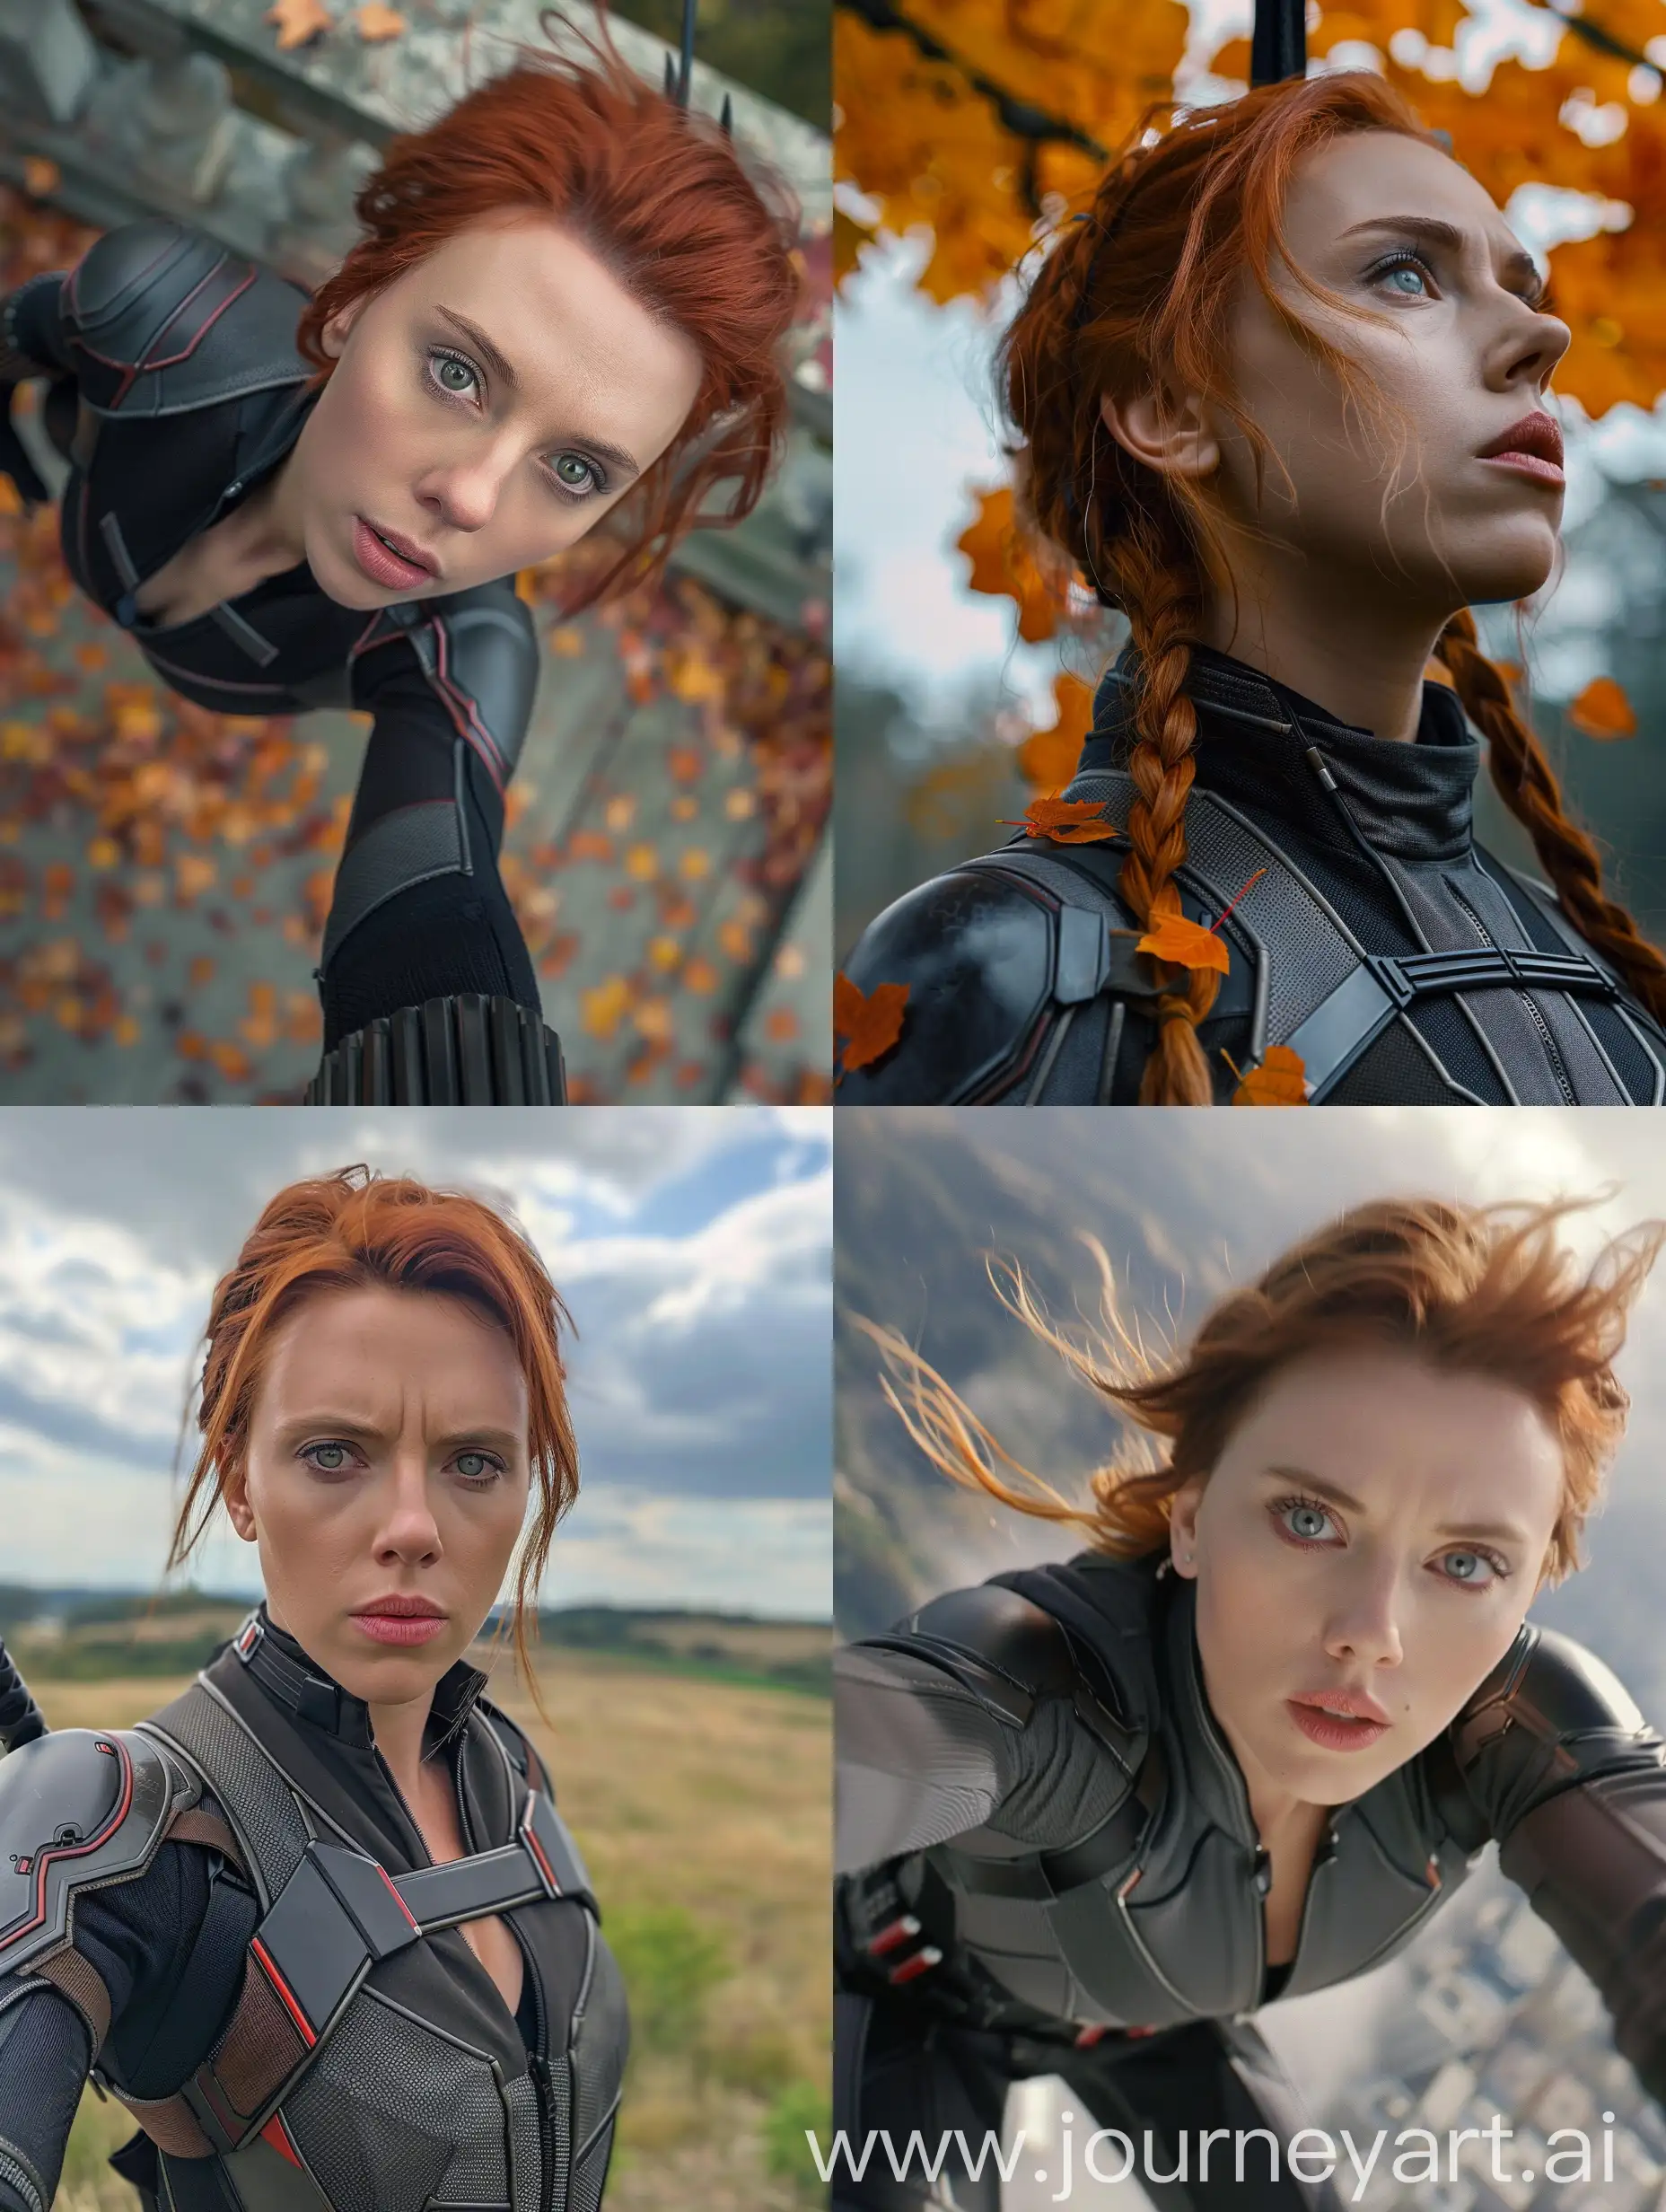 Scarlett-Johansson-as-Black-Widow-Marvel-Character-in-Autumn-Setting-Selfie